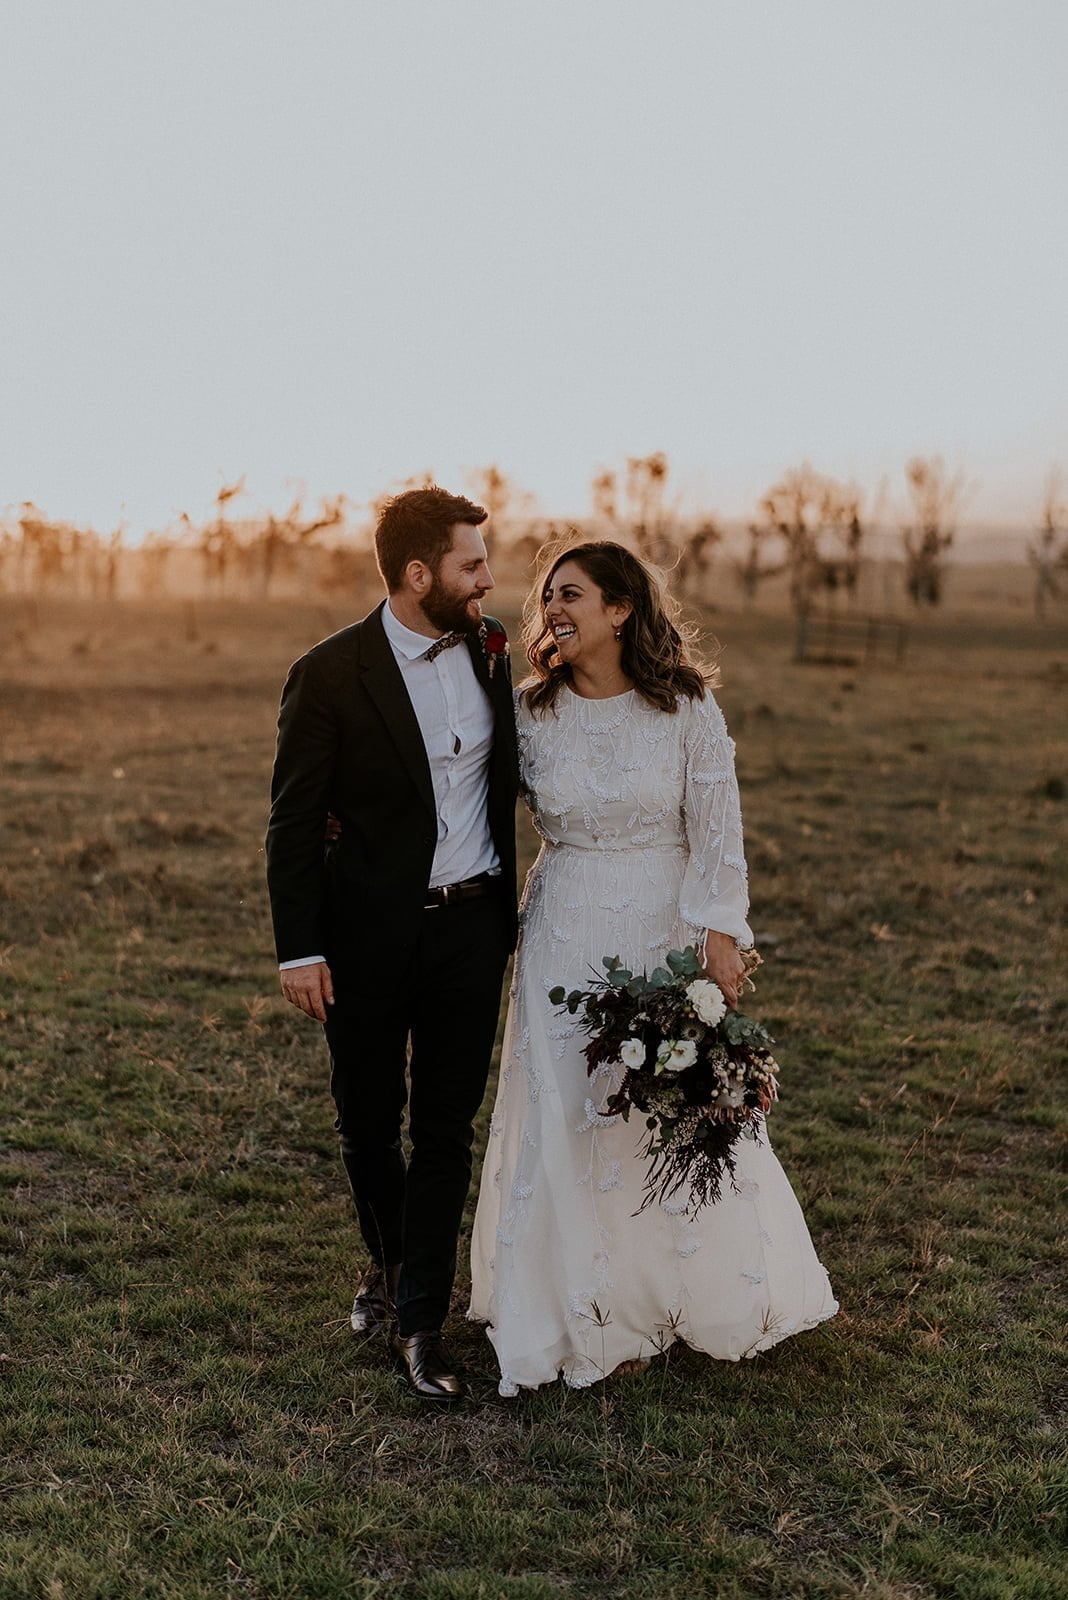 LISA & STEVE’S WESTERN SYDNEY WEDDING – Hello May